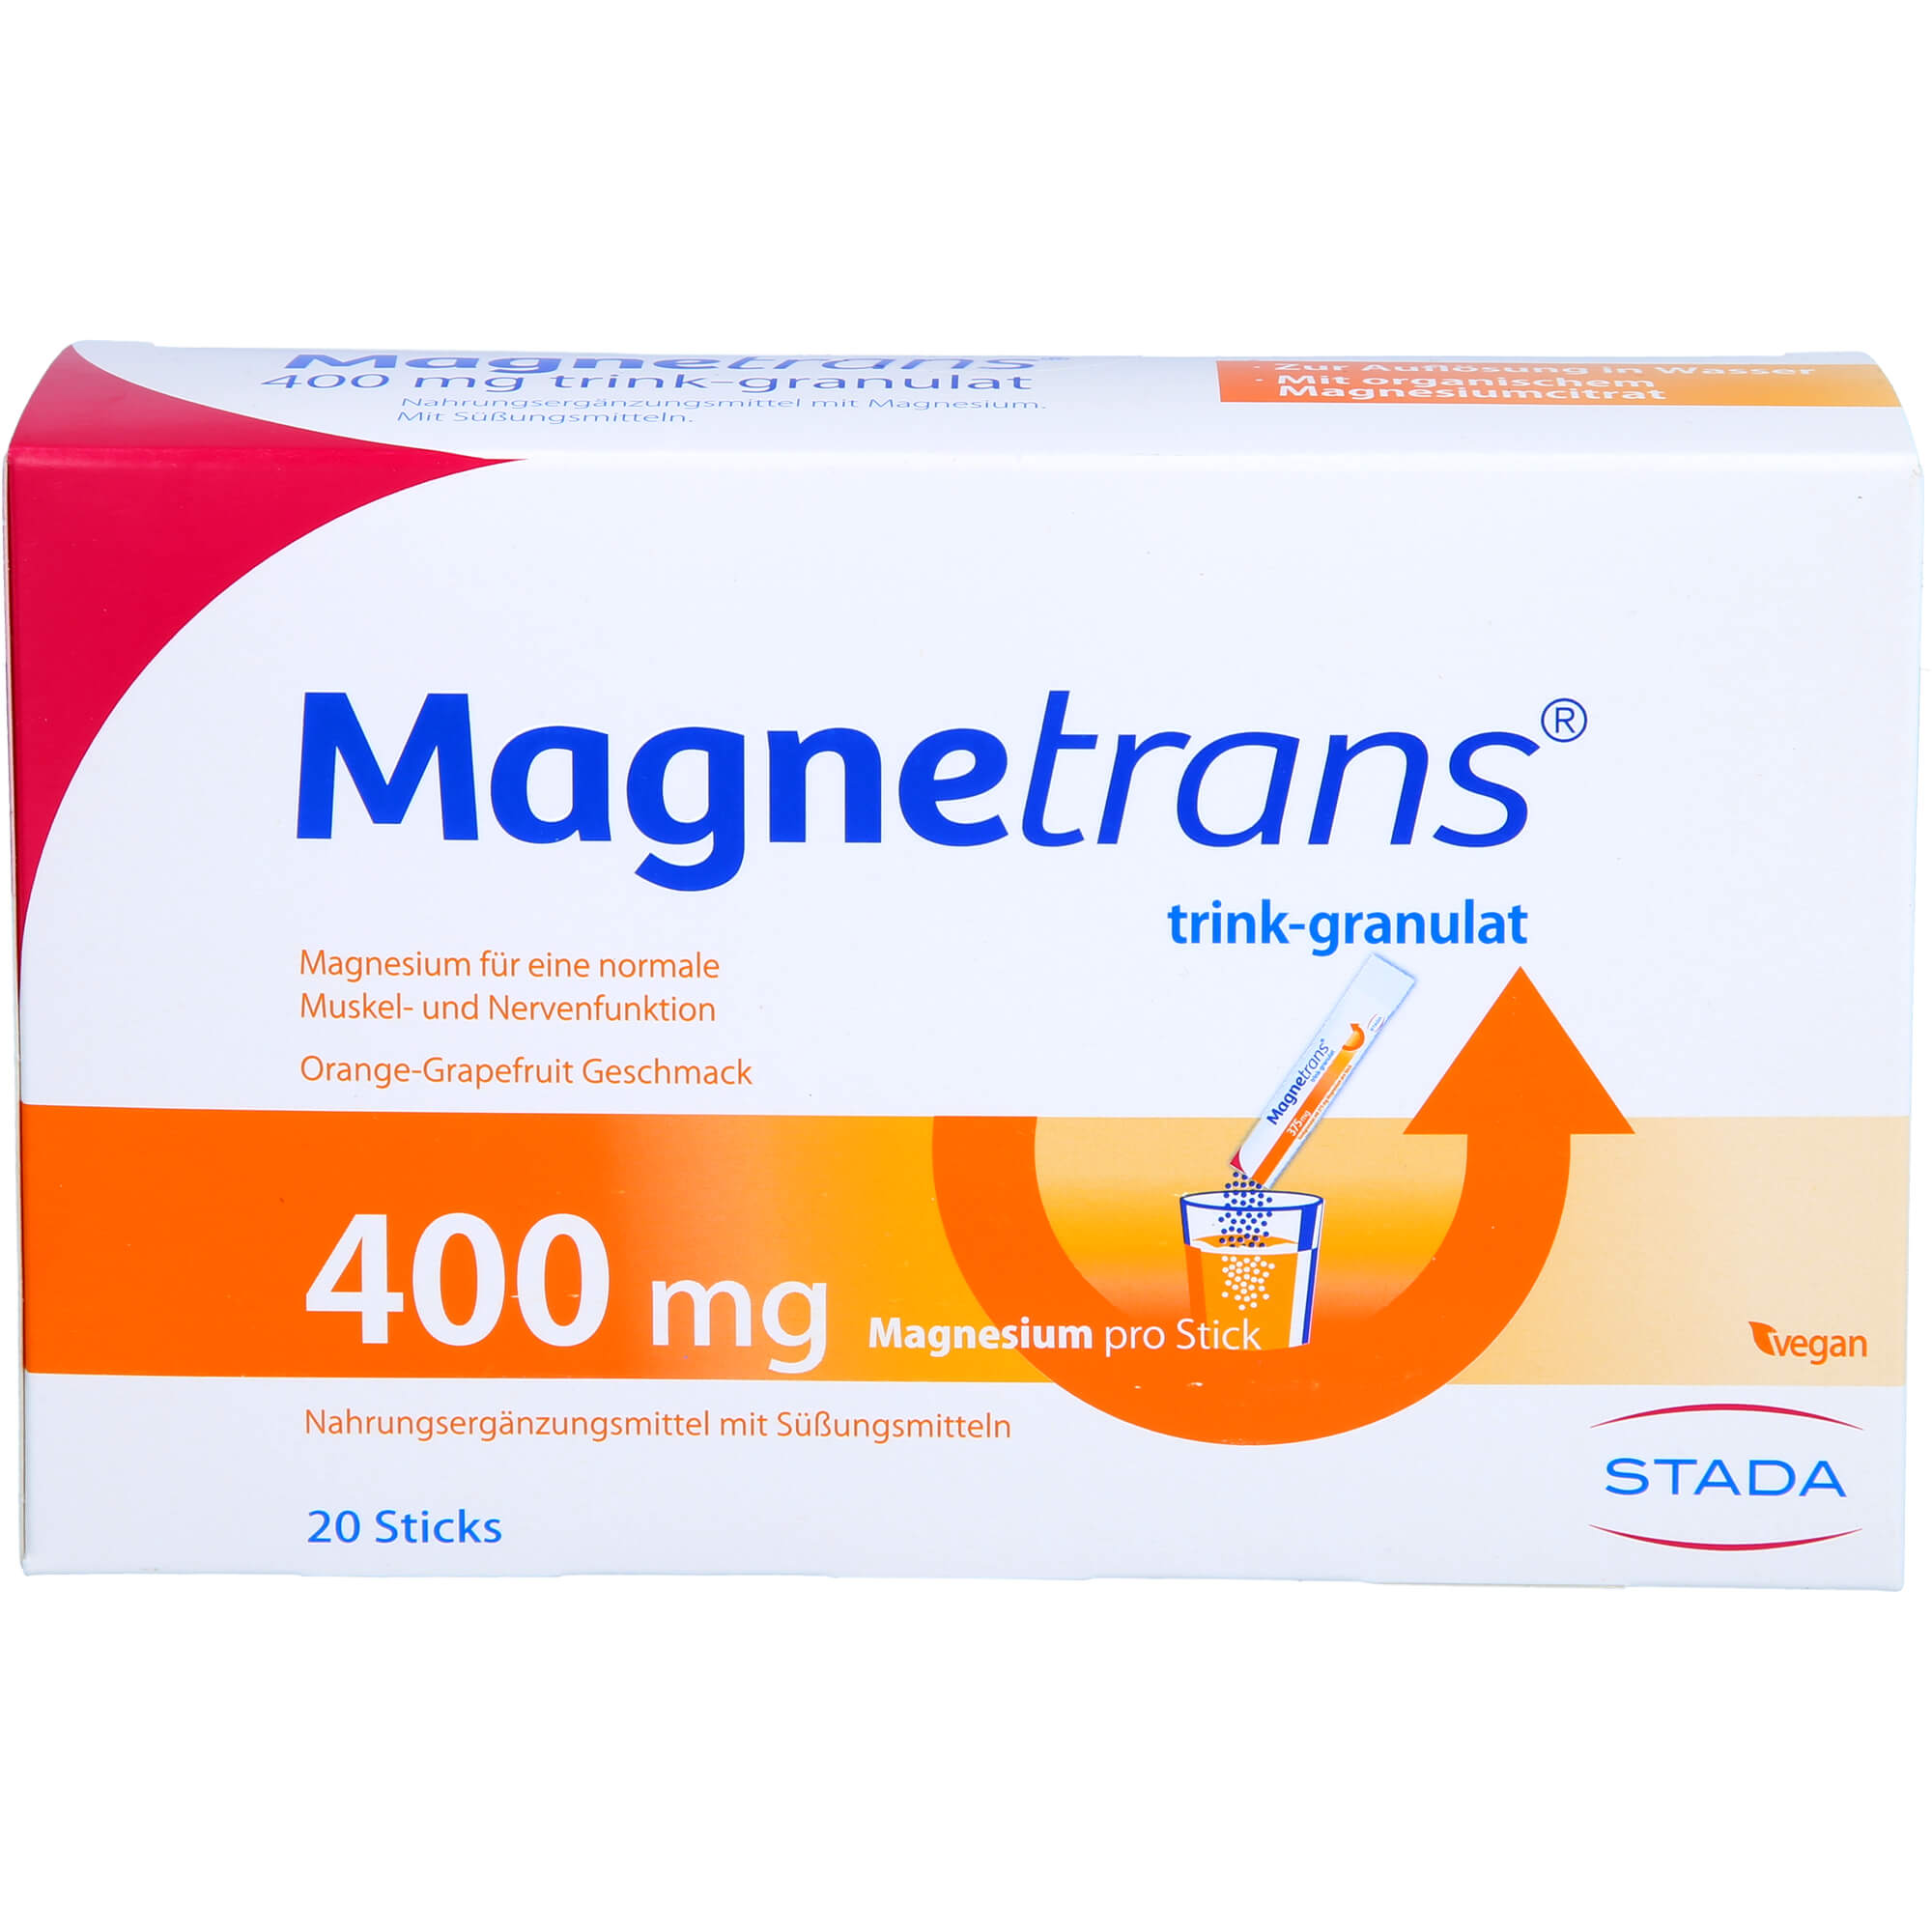 MAGNETRANS 400 mg trink-granulat